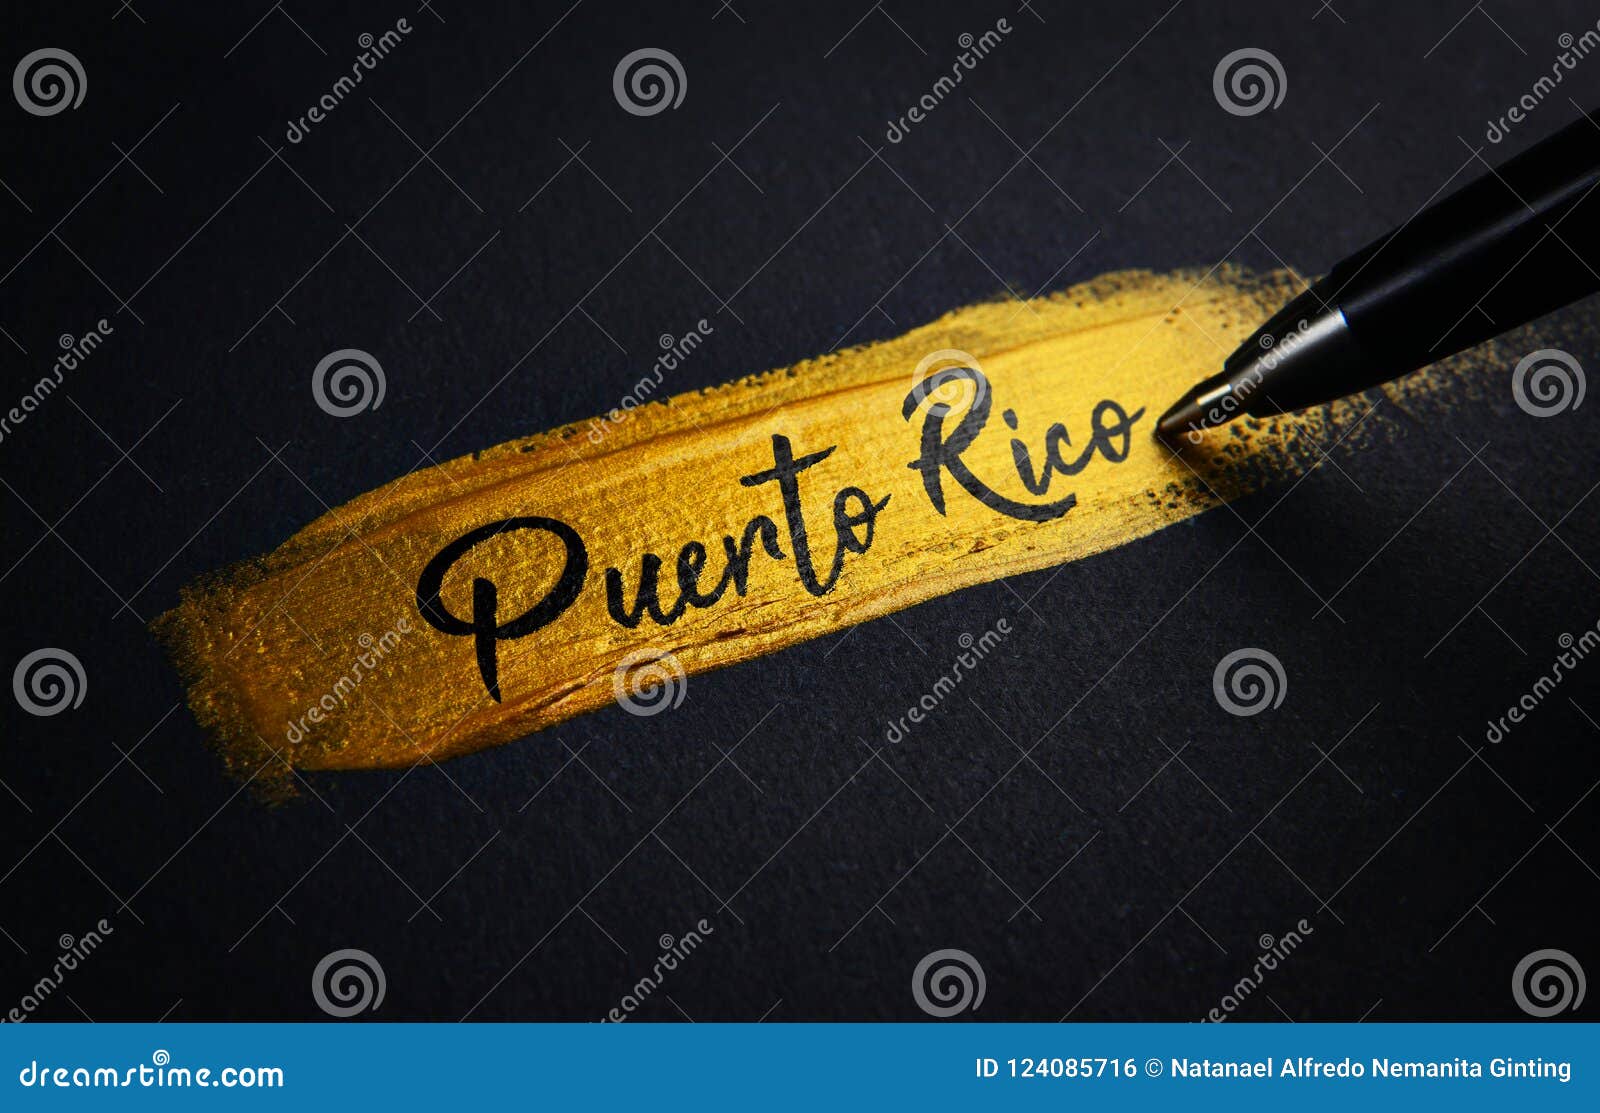 Puerto Rico Handwriting Text on Golden Paint Brush Stroke Stock